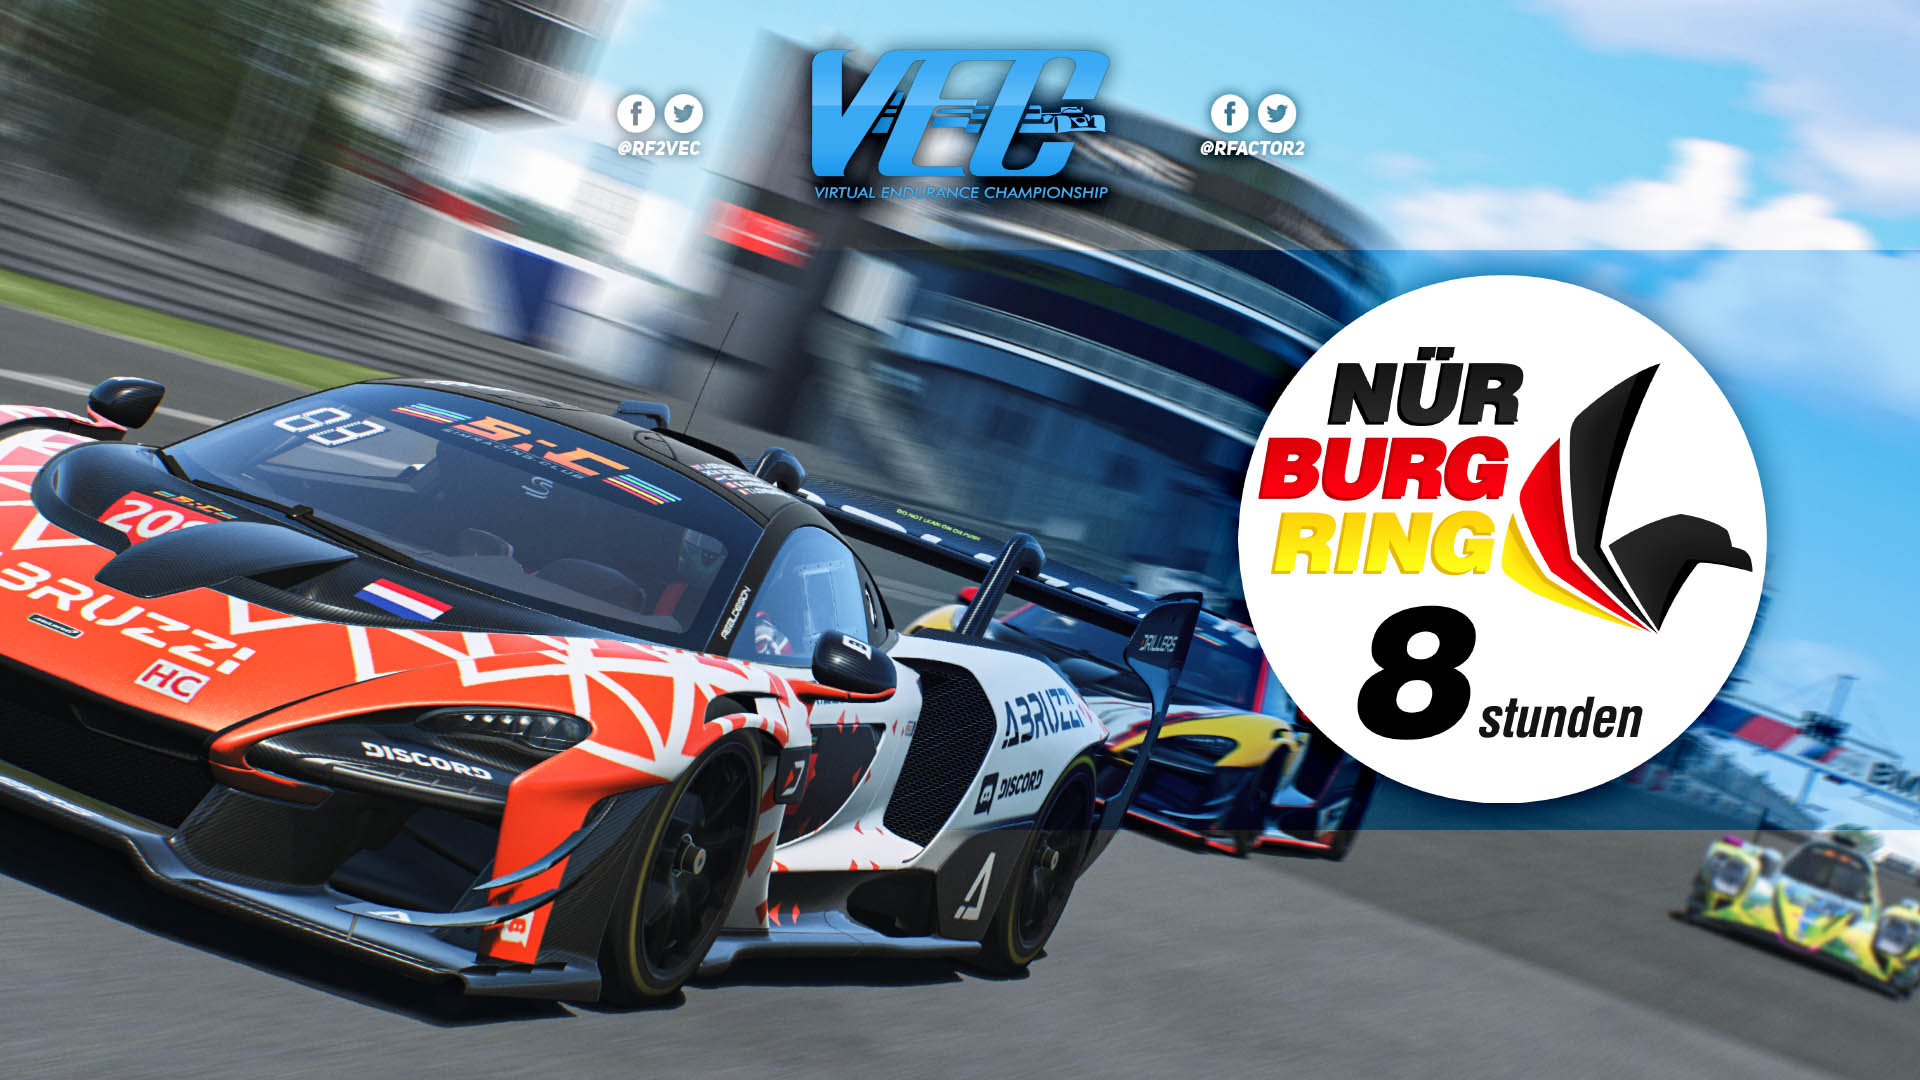 VEC-thumbnails-Nurburgring.jpg